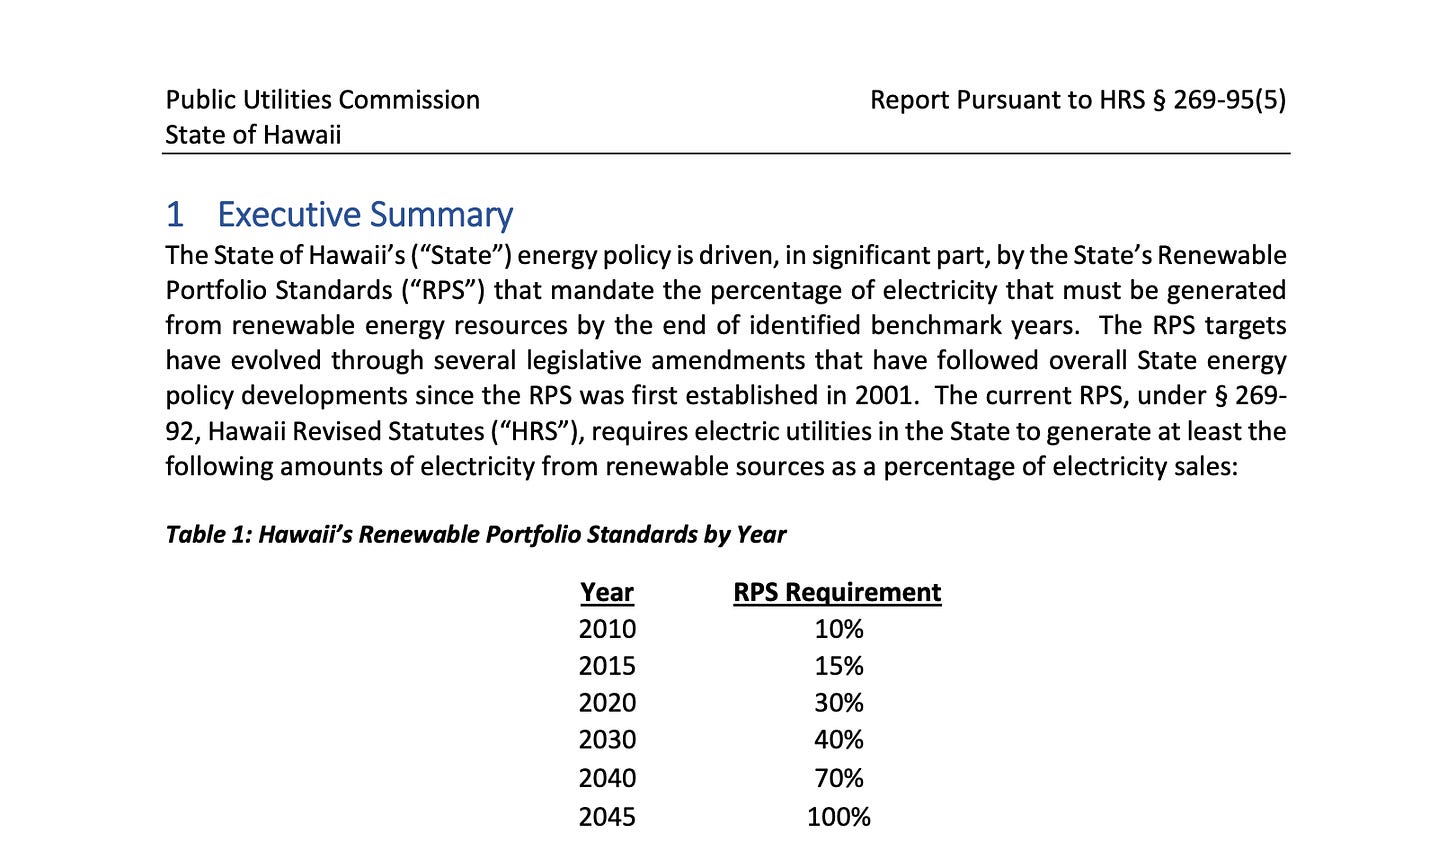 Hawaii’s Renewable Portfolio Standards by Year